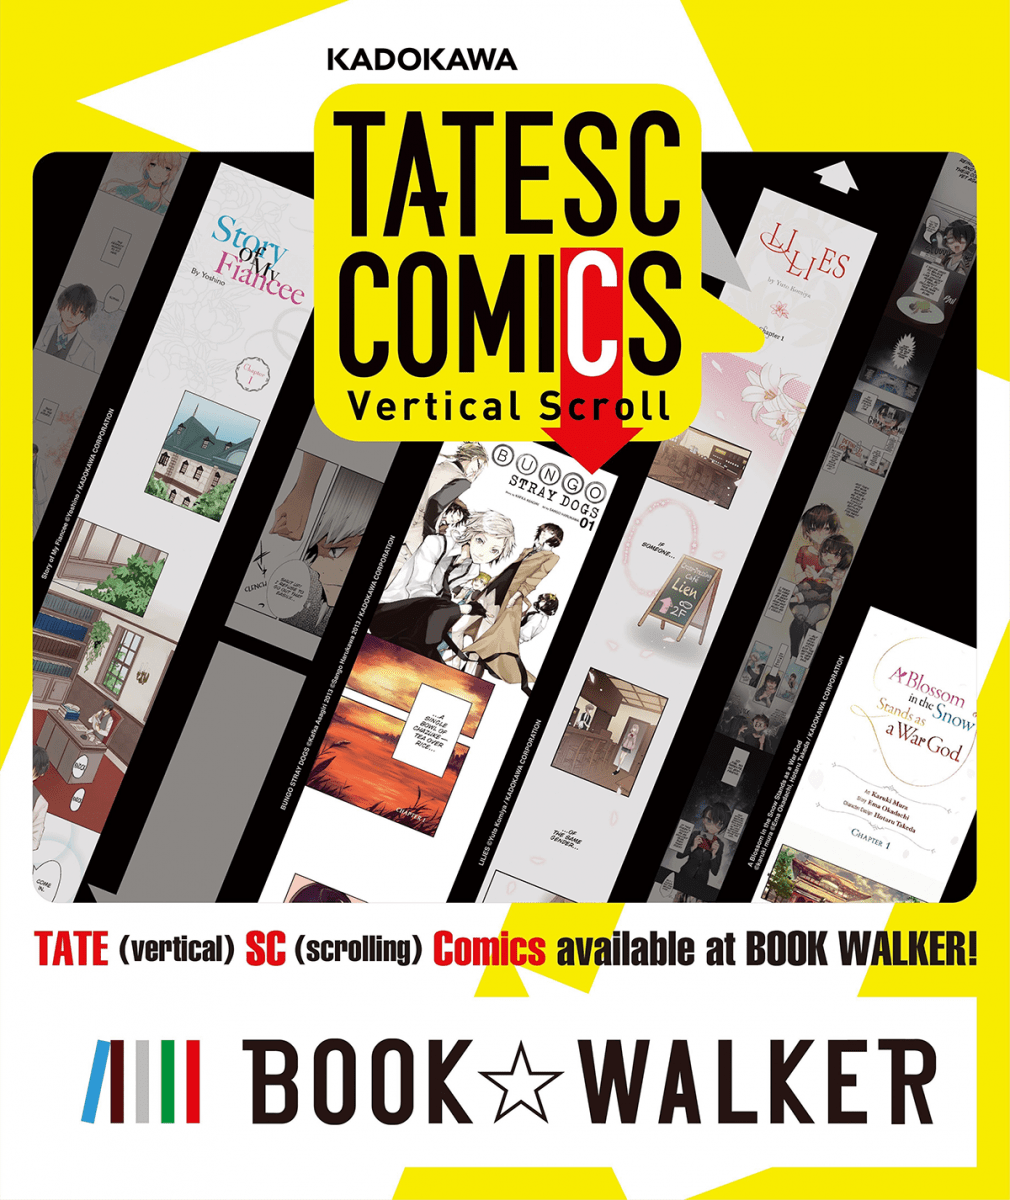 KADOKAWAによる縦スクロール型コミック「タテスクコミック」、 英語版「TATESC COMICS」をBOOK☆WALKER  Globalで世界展開開始 〈KADOKAWA／ブックウォーカー〉 ニュースリリース KADOKAWAグループ ポータルサイト